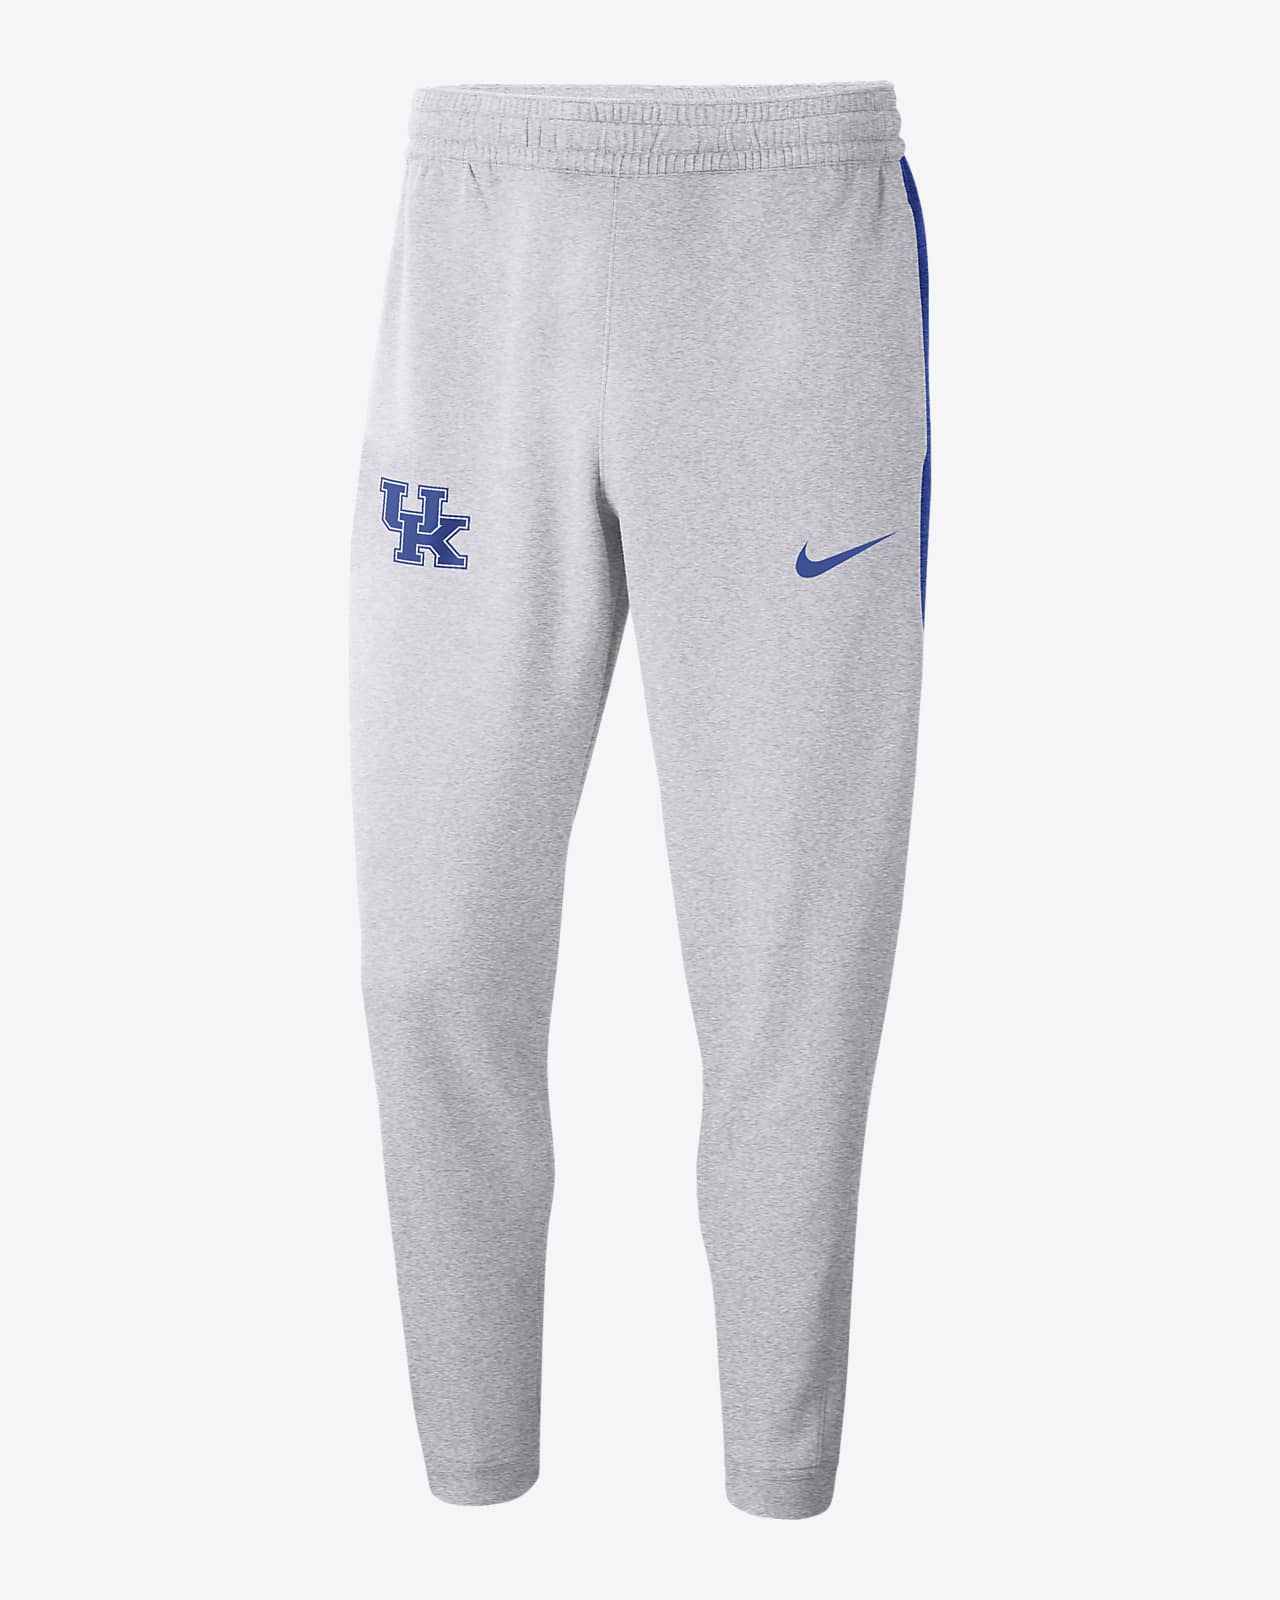 Nike College Dri-FIT Spotlight (Penn State) Men's Pants